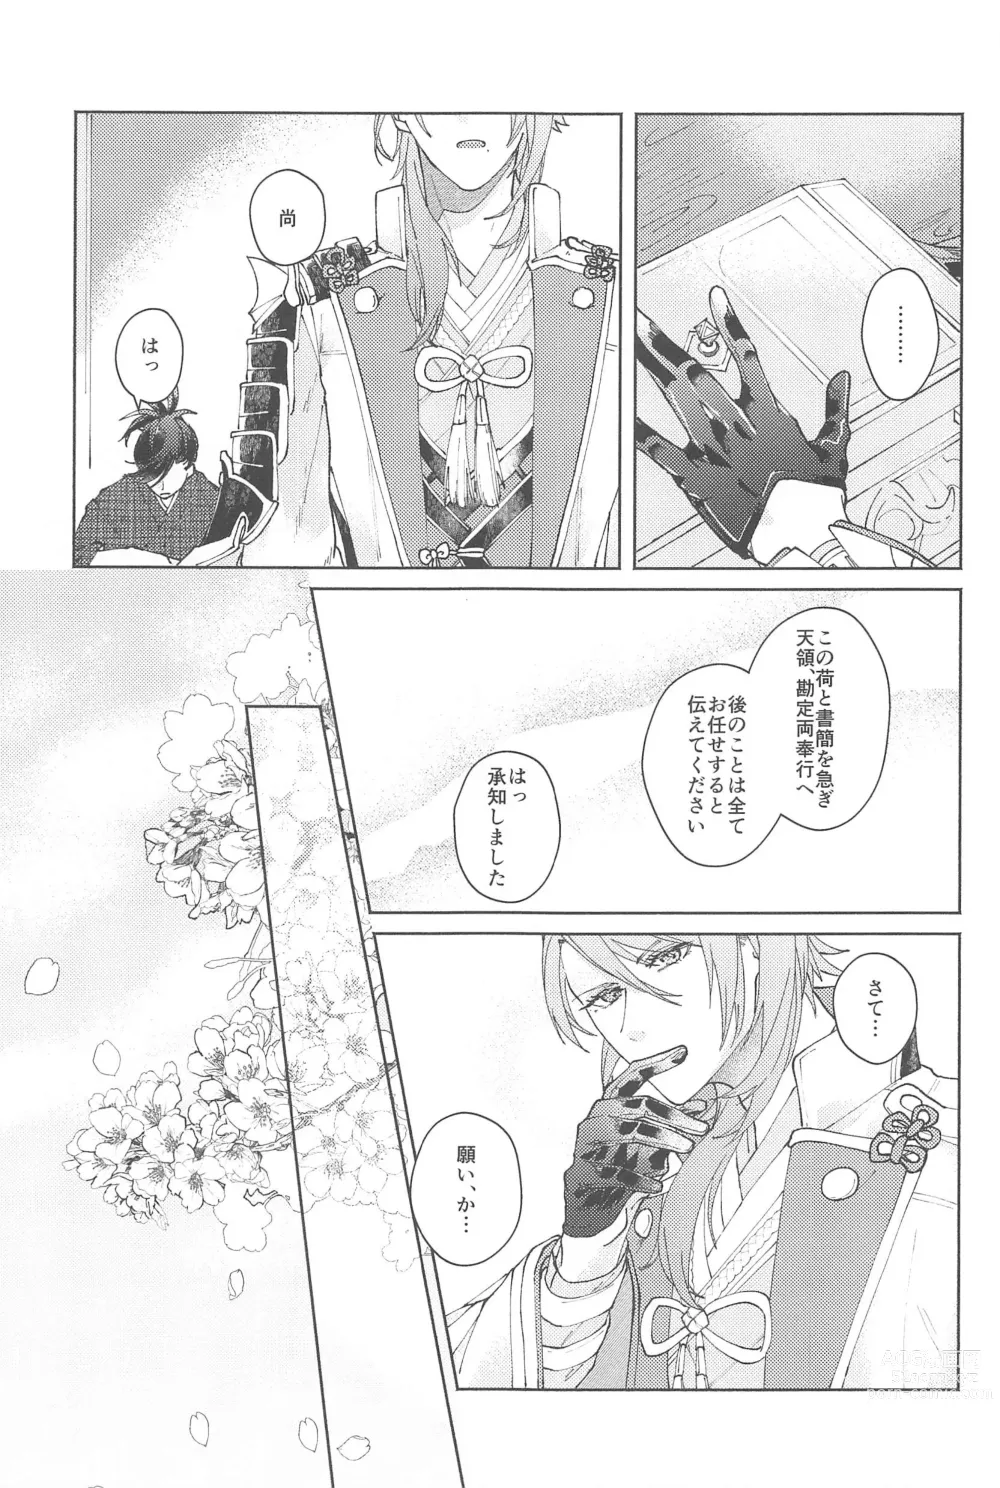 Page 16 of doujinshi Zenbu Kimi no Mono